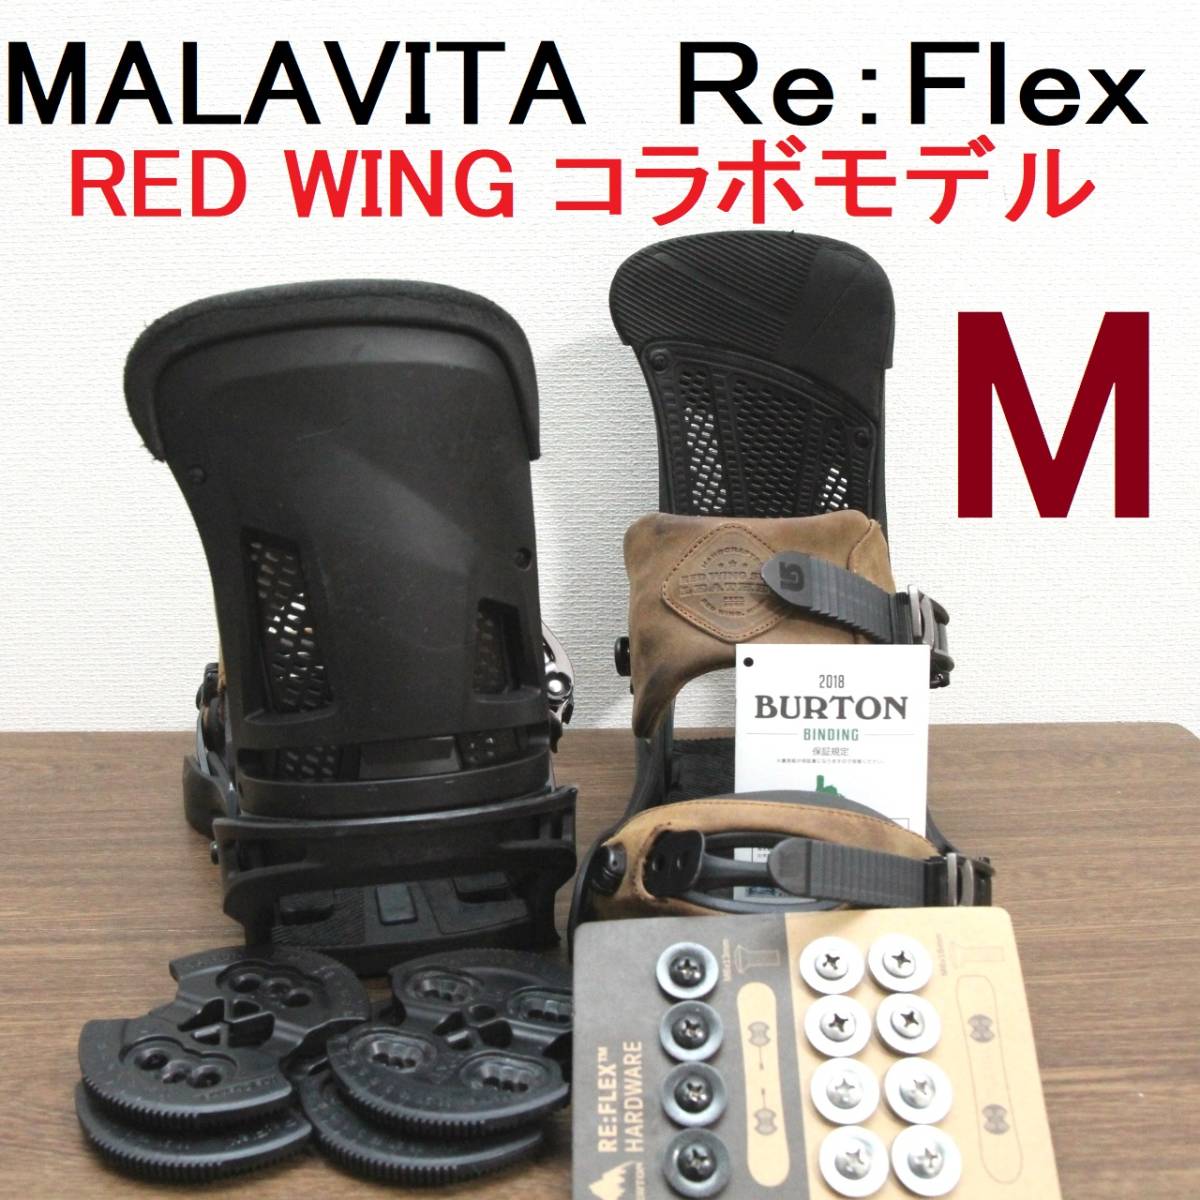 burton malavita redwing モデル M redoven.co.uk